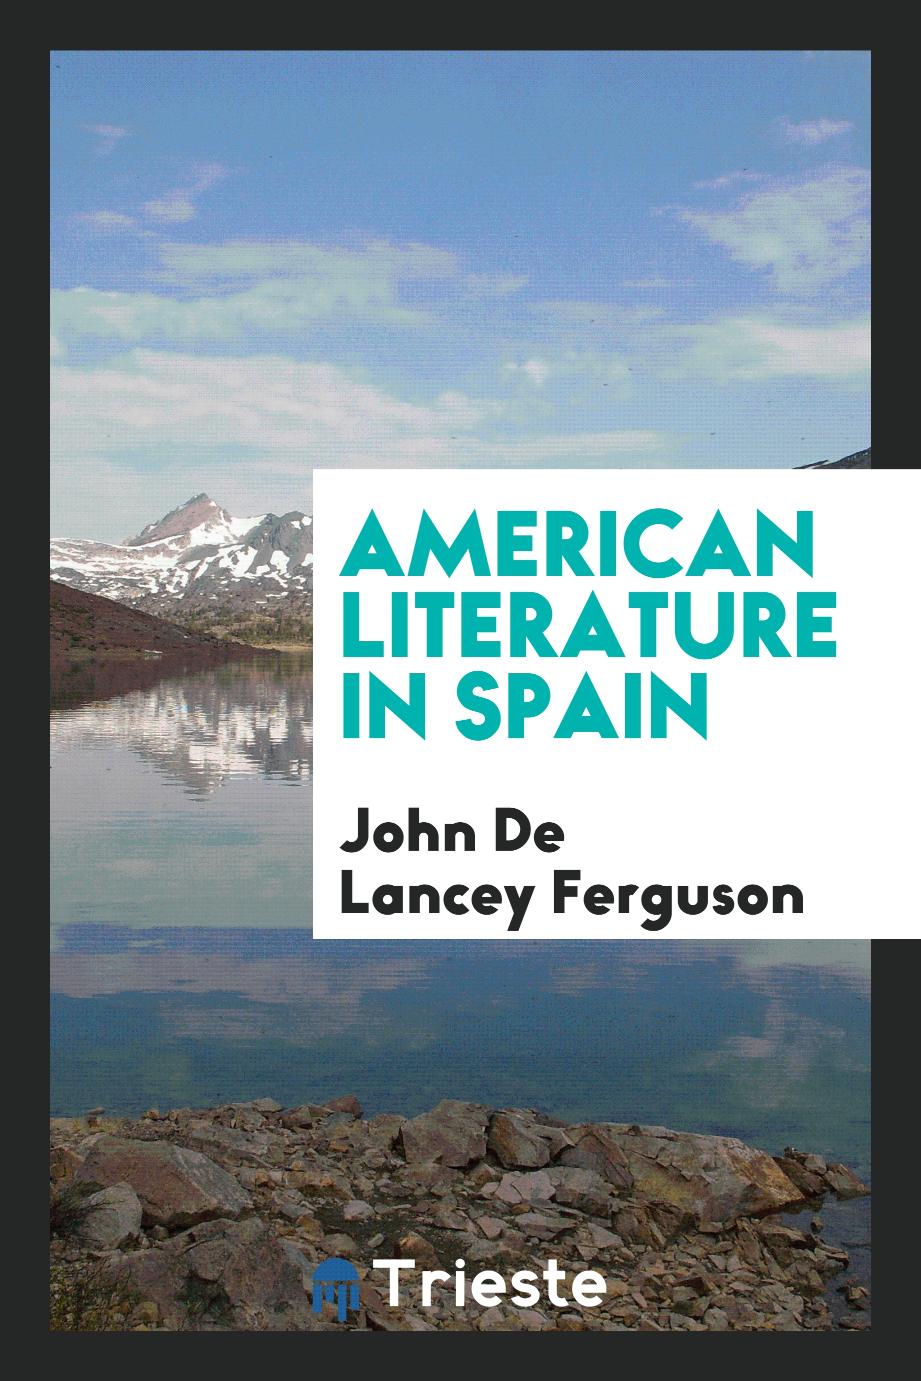 American literature in Spain